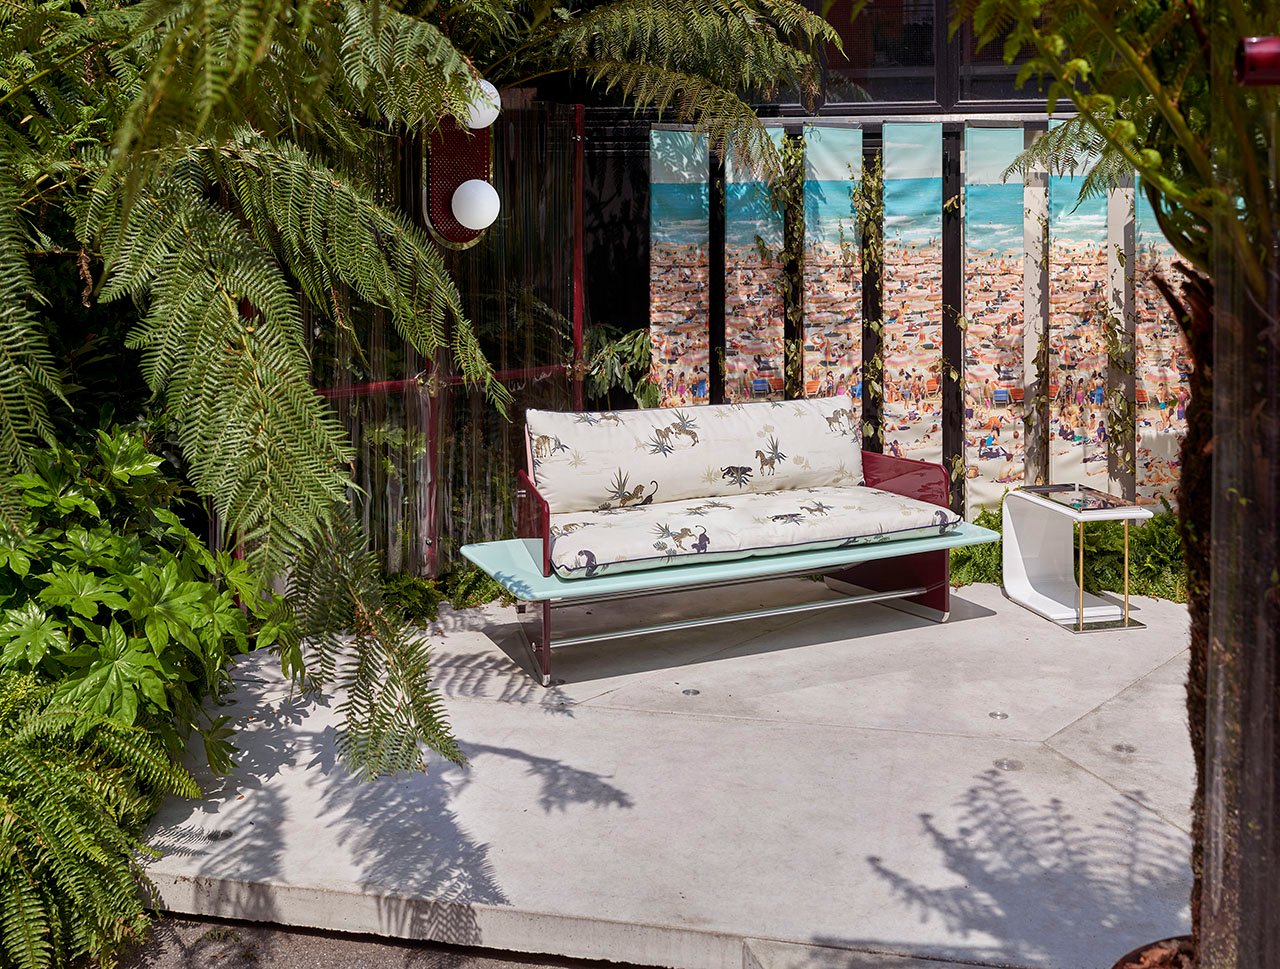 Supernova outdoor furniture series by Derek Castiglioni. Installation view at Nilufar Depot by Pim Top.